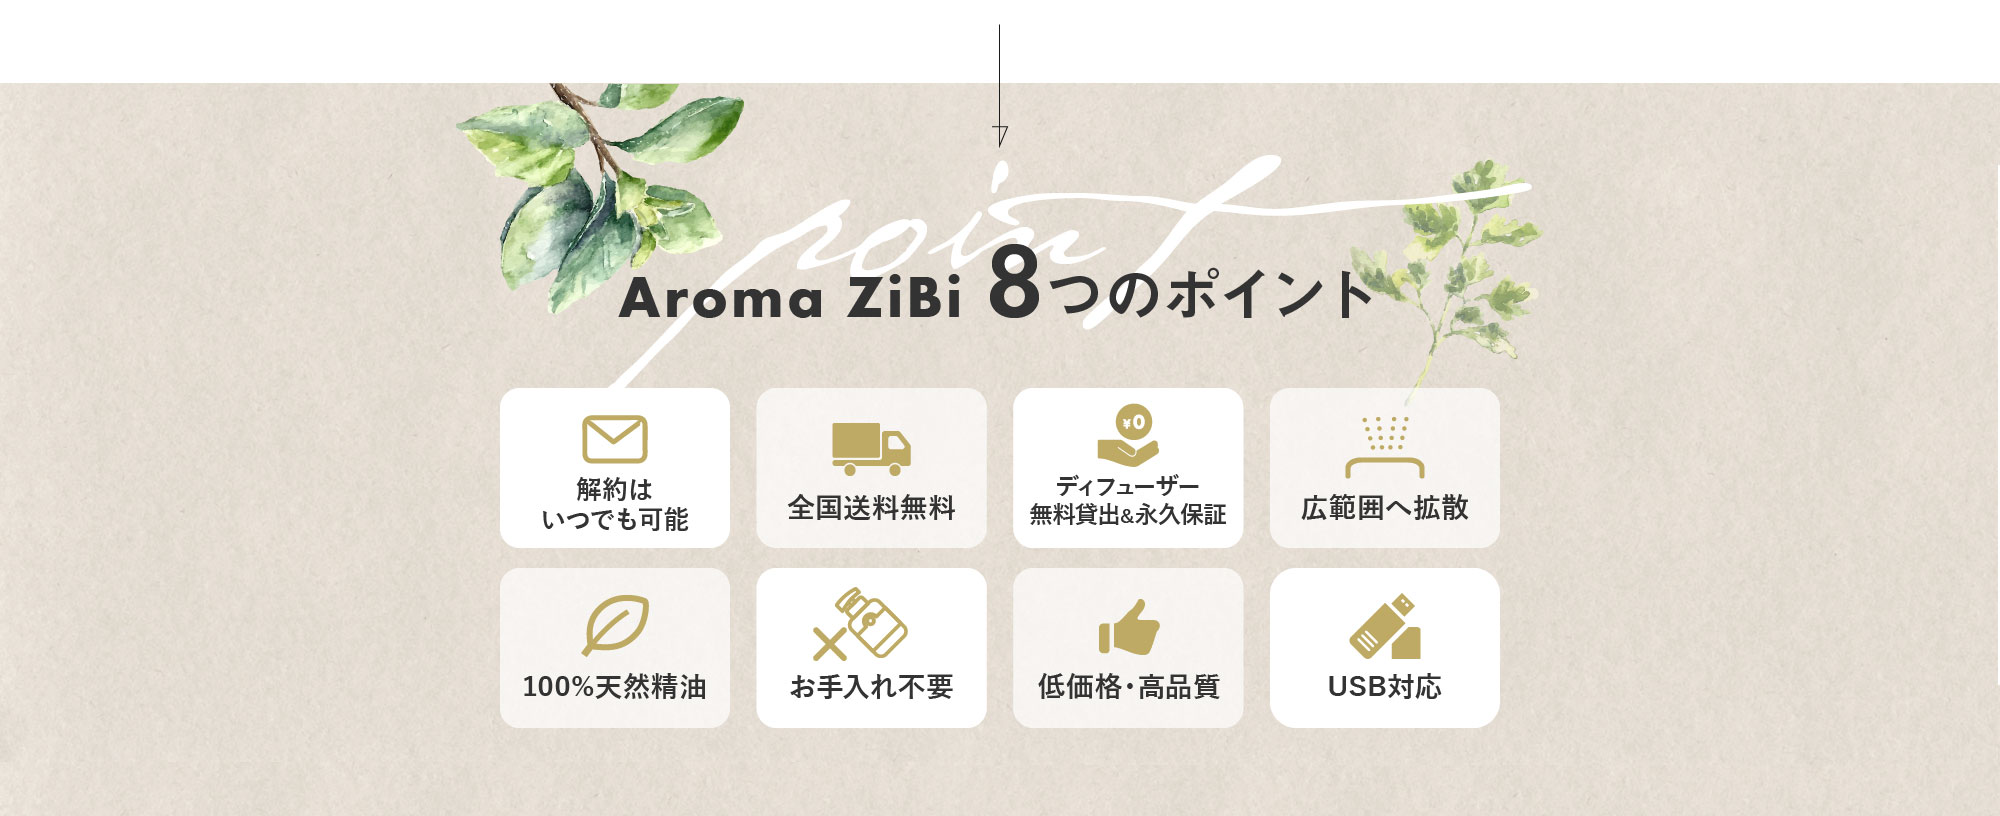 Aroma ZiBi 8つのポイント